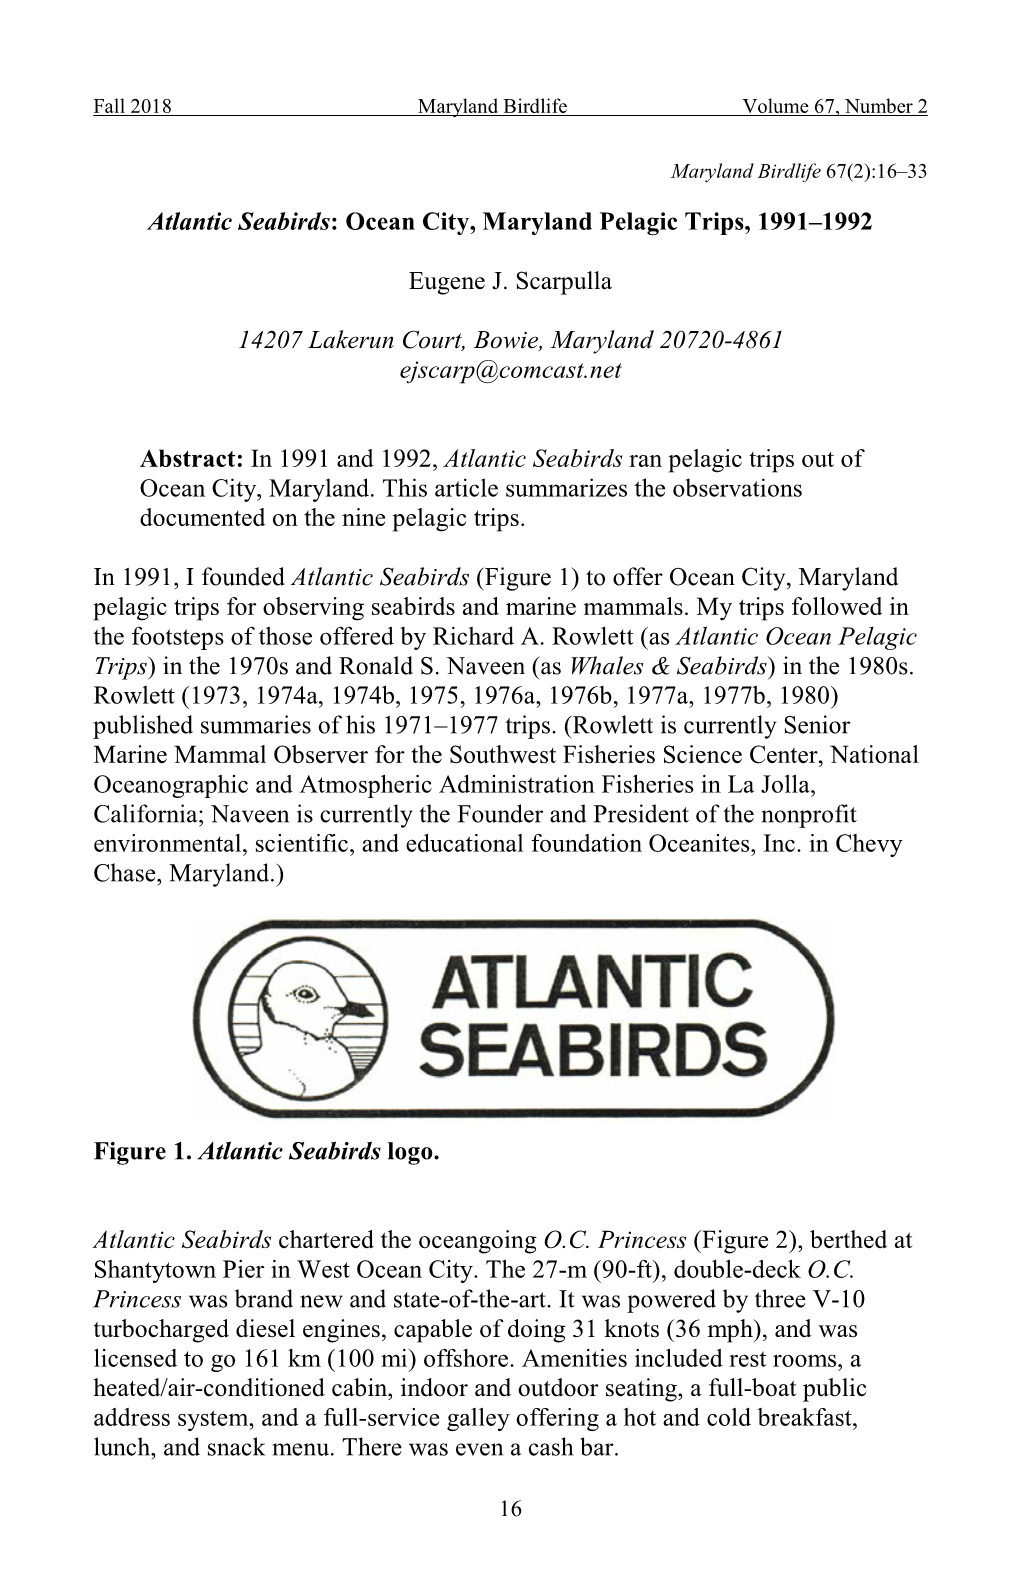 Atlantic Seabirds: Ocean City, Maryland Pelagic Trips, 1991–1992